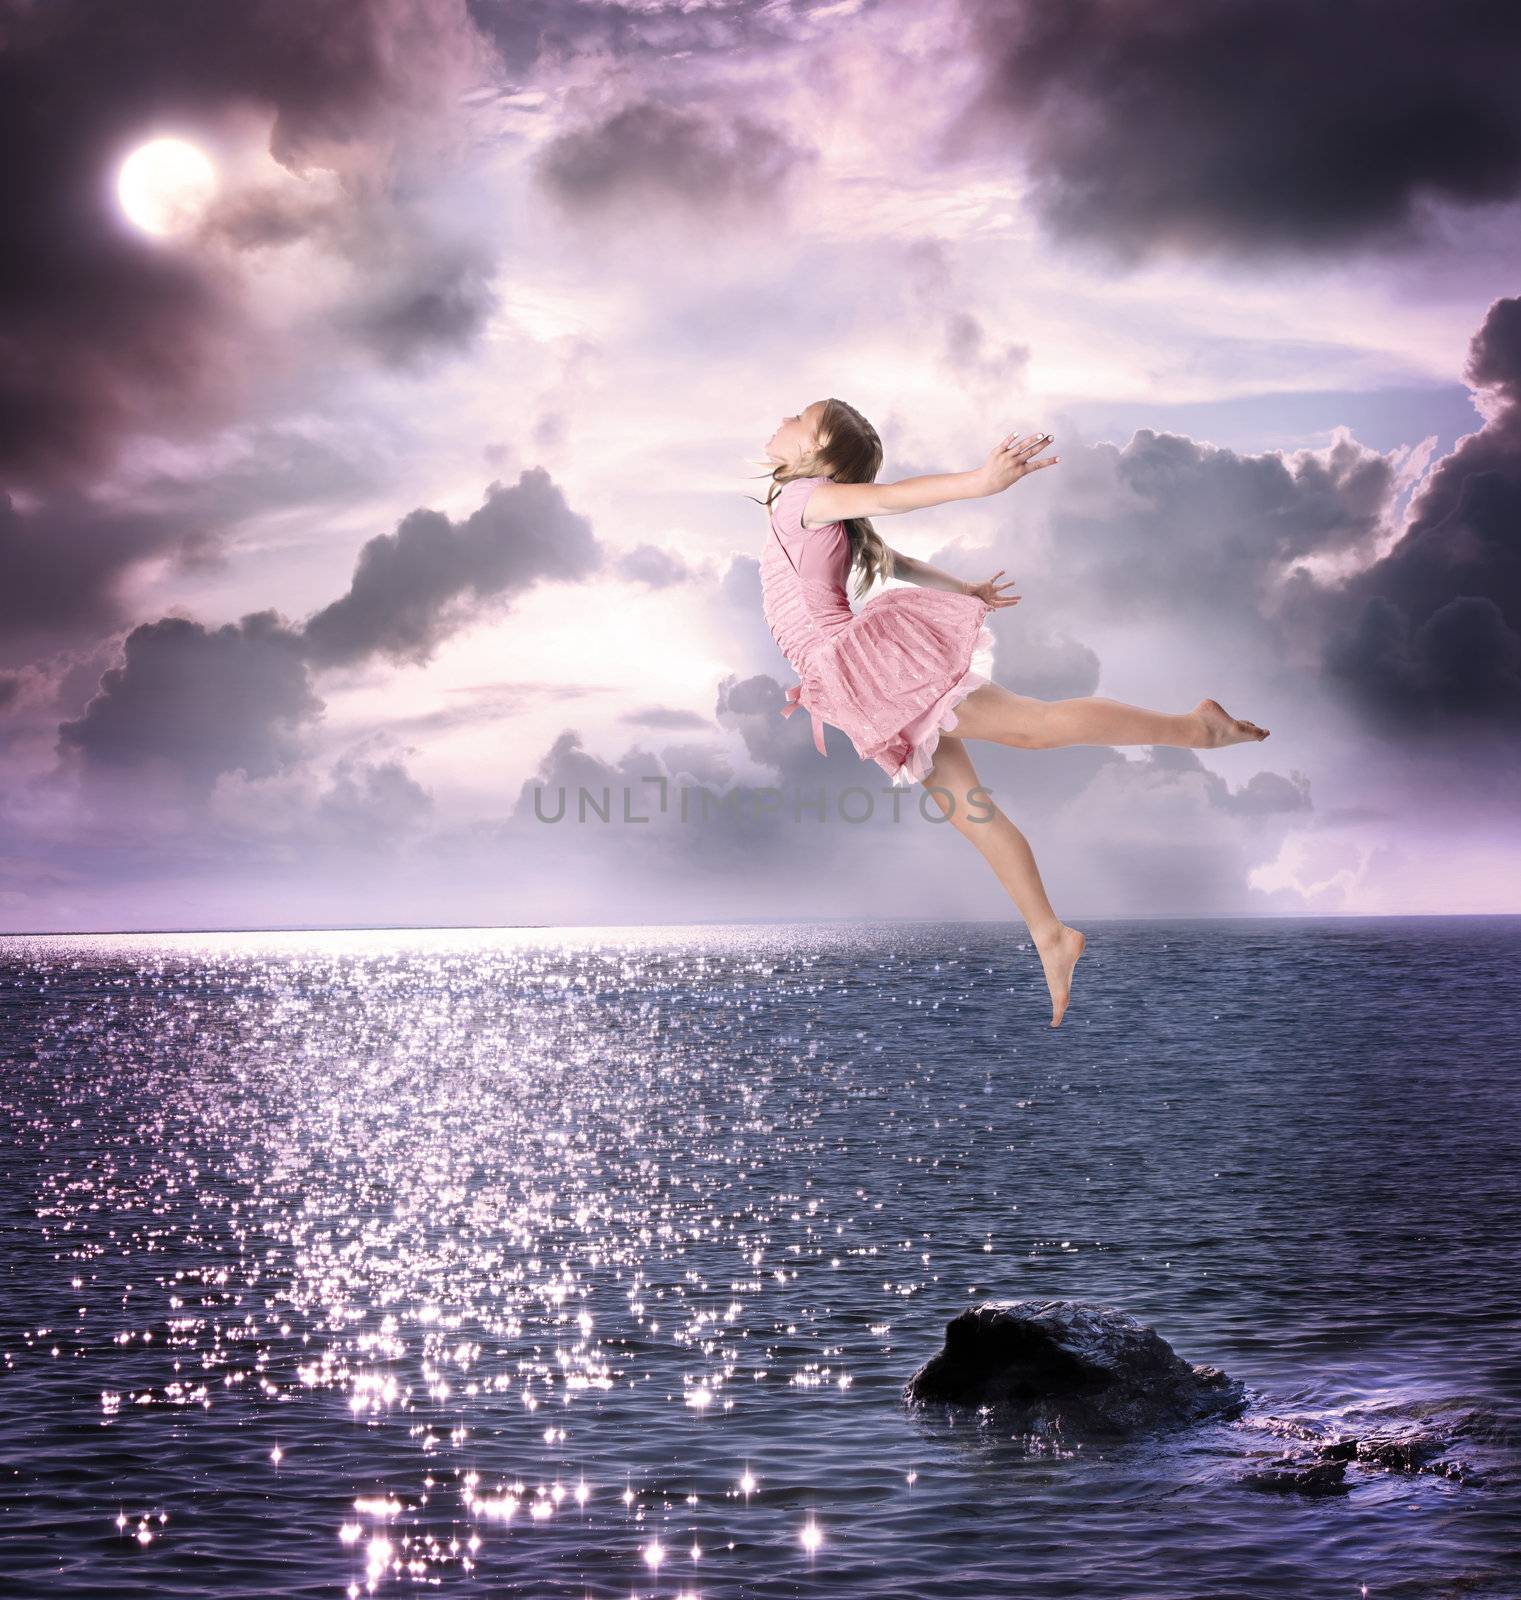 Little girl jumping into the night sky by melpomene